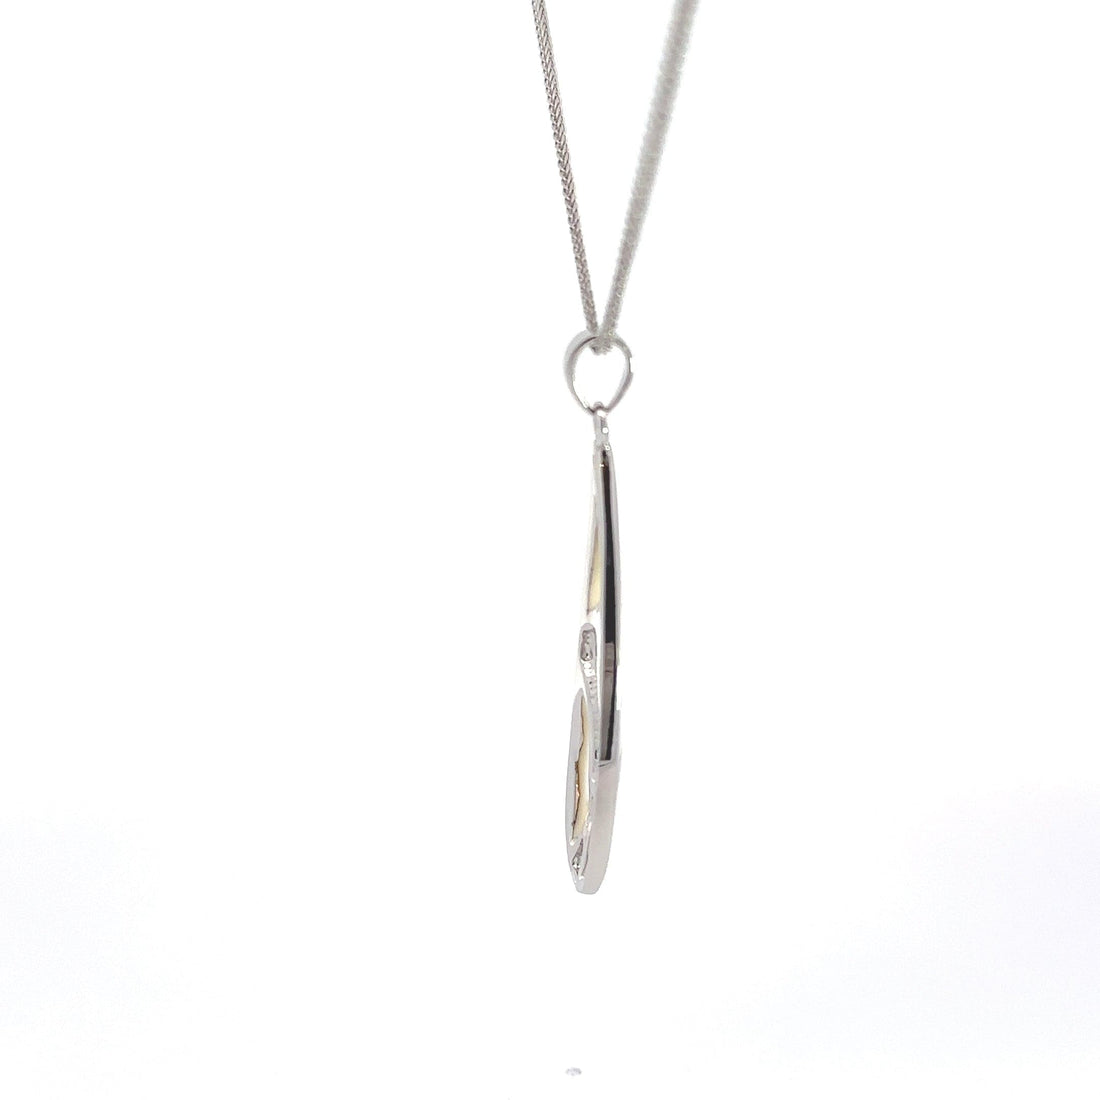 Baikalla Jewelry Gemstone Pendant Necklace Baikalla Sterling Silver Lab-Made Opal Pendant Necklace